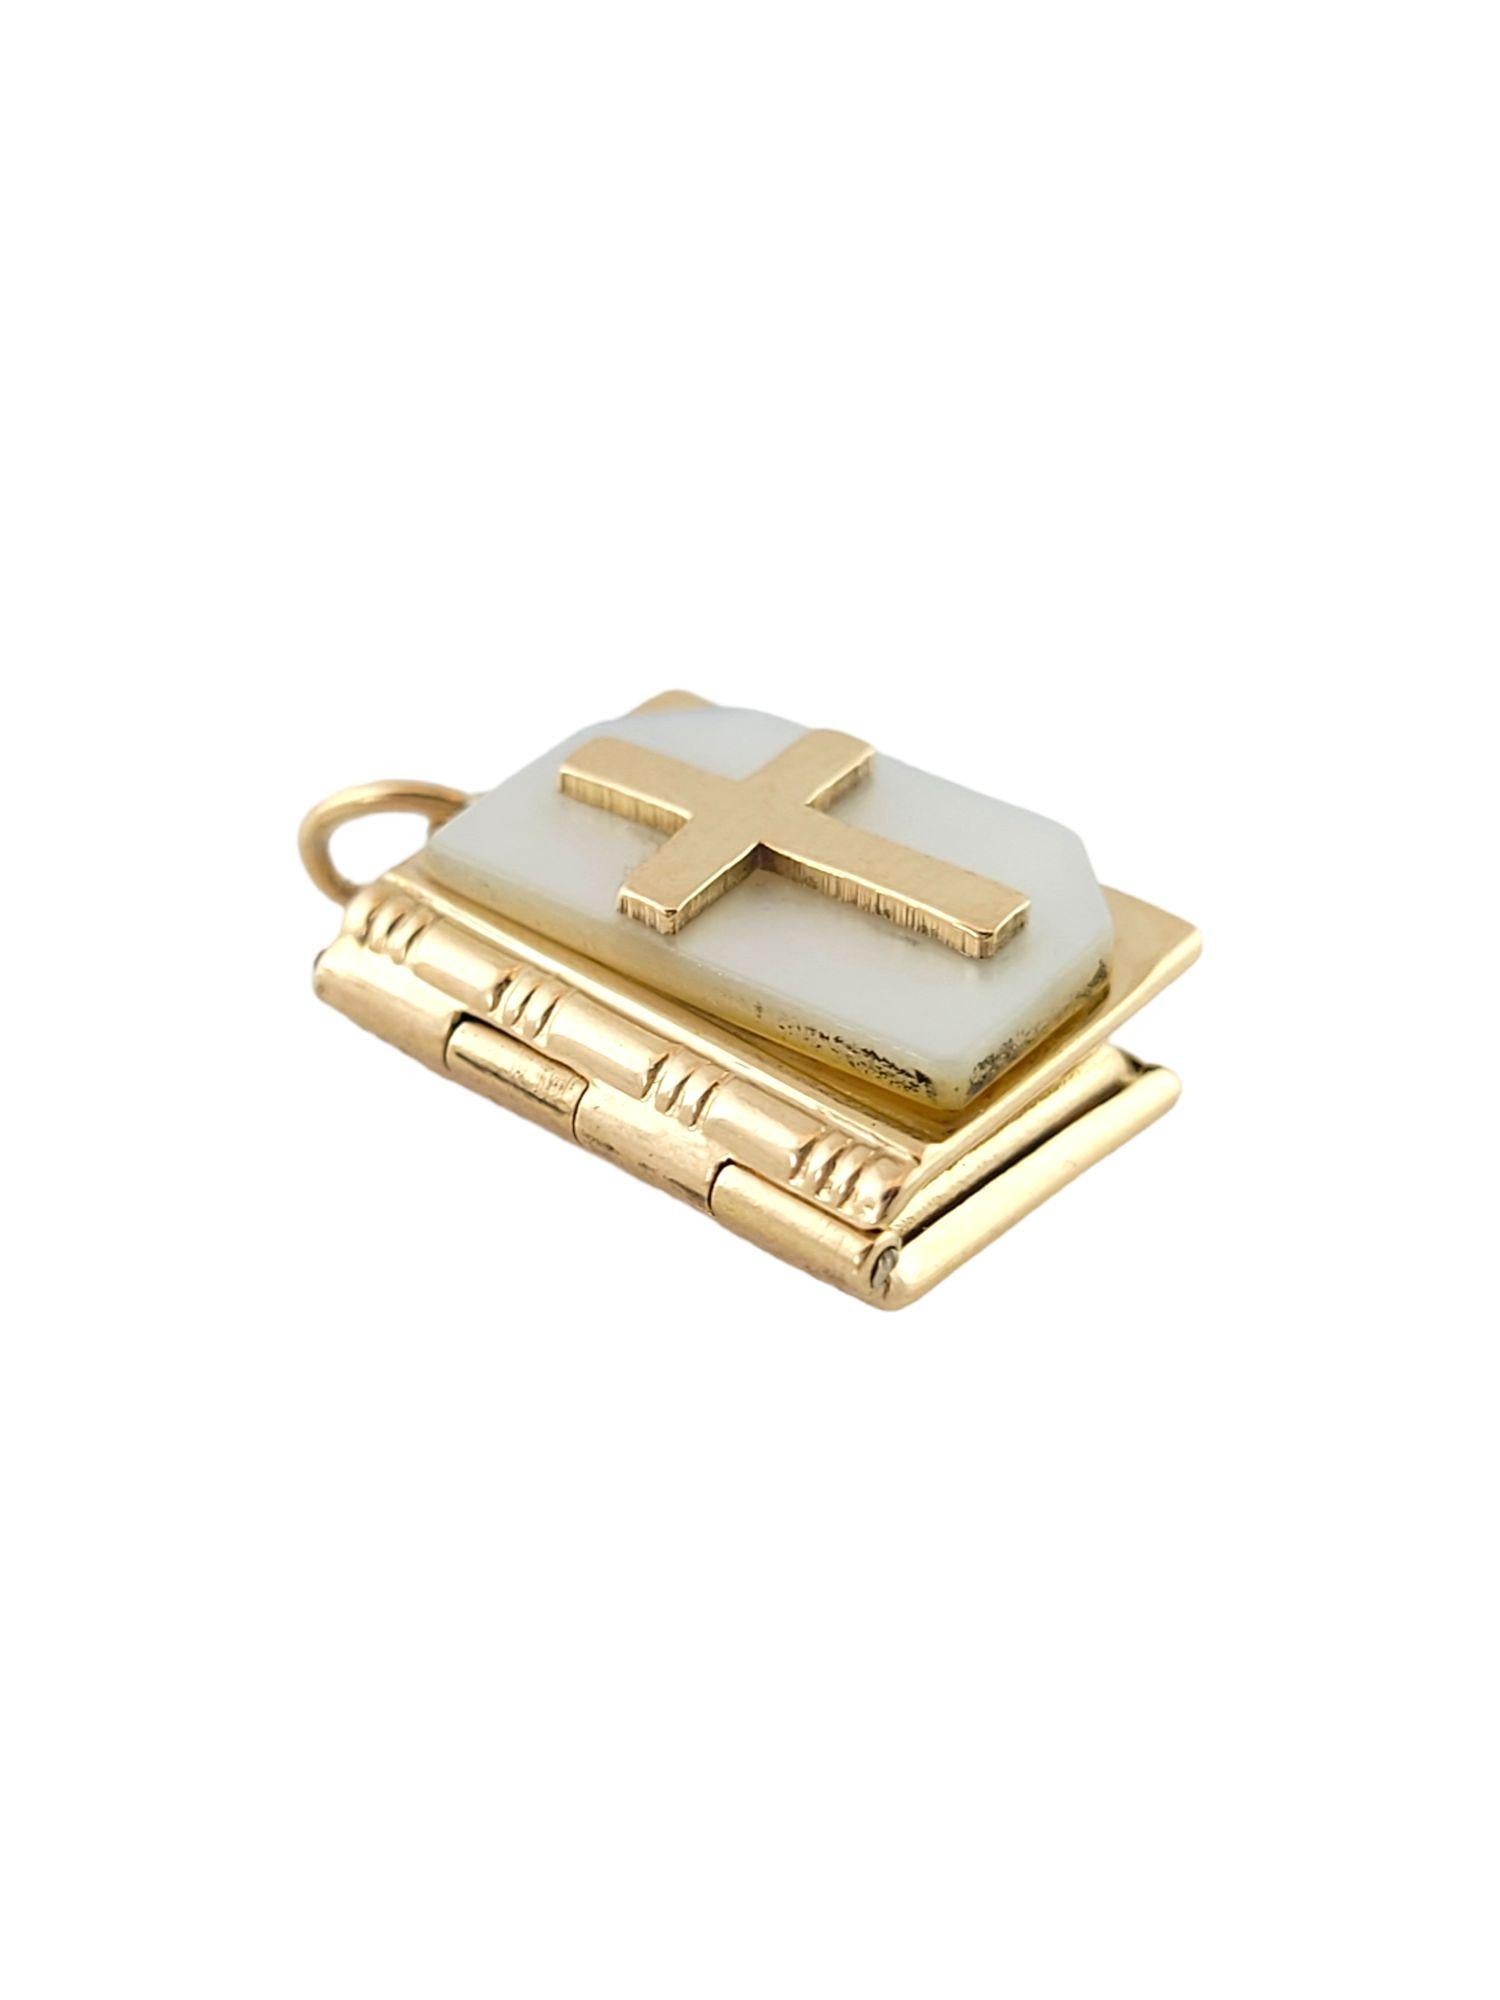 14k gold bible pendant